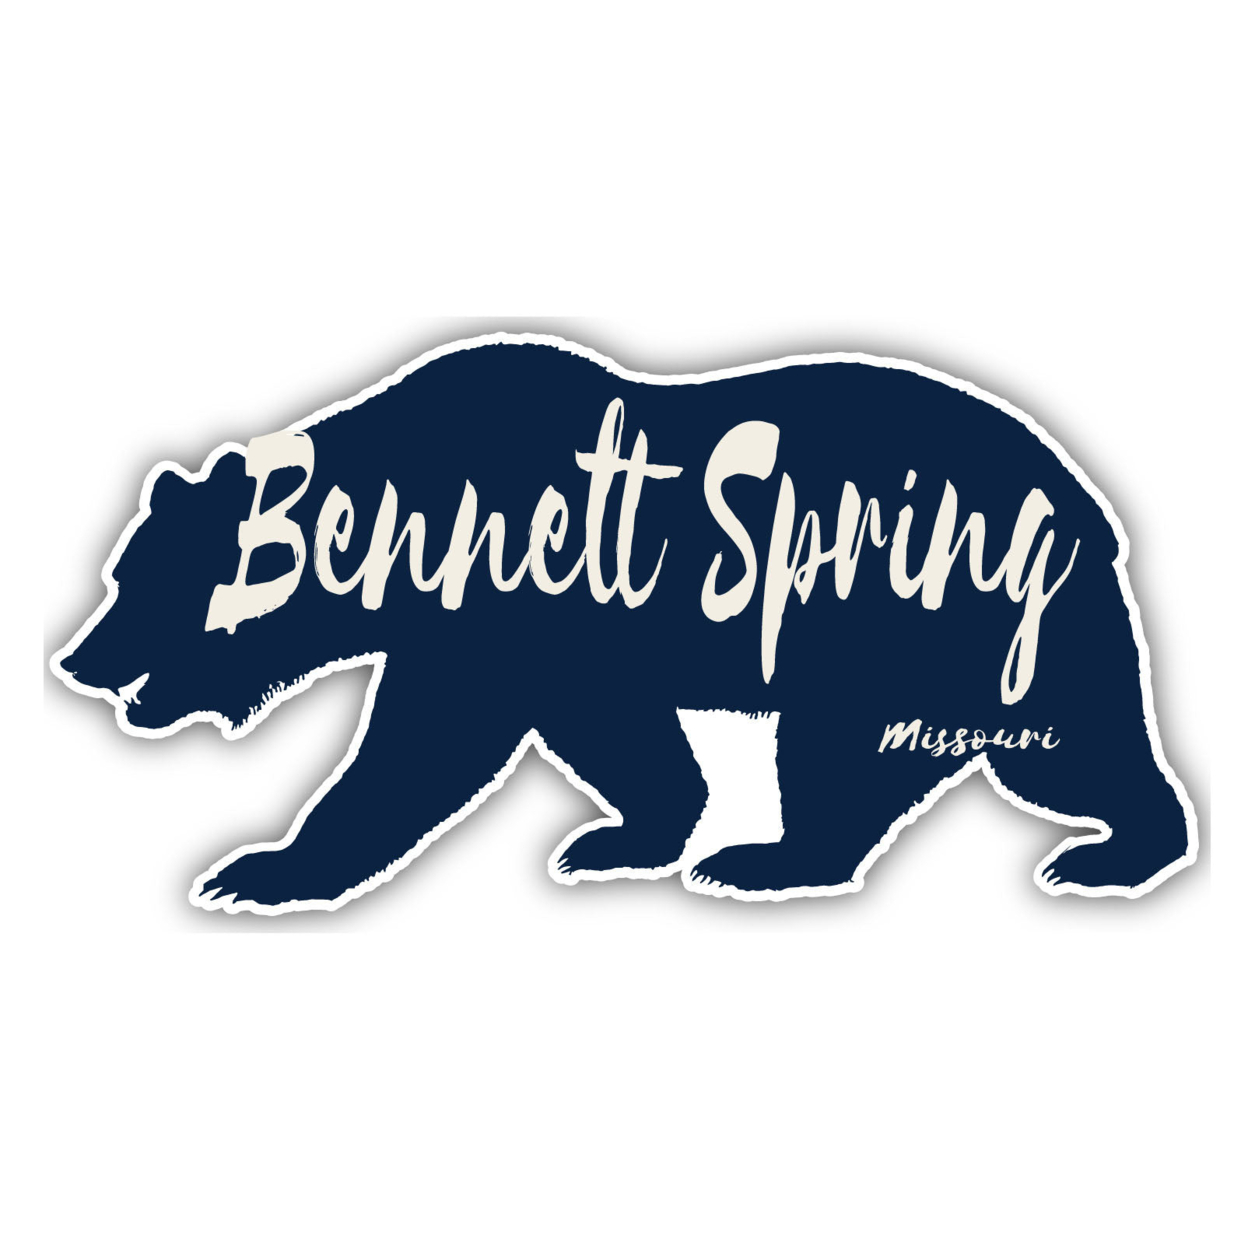 Bennett Spring Missouri Souvenir Decorative Stickers (Choose Theme And Size) - 4-Pack, 12-Inch, Bear